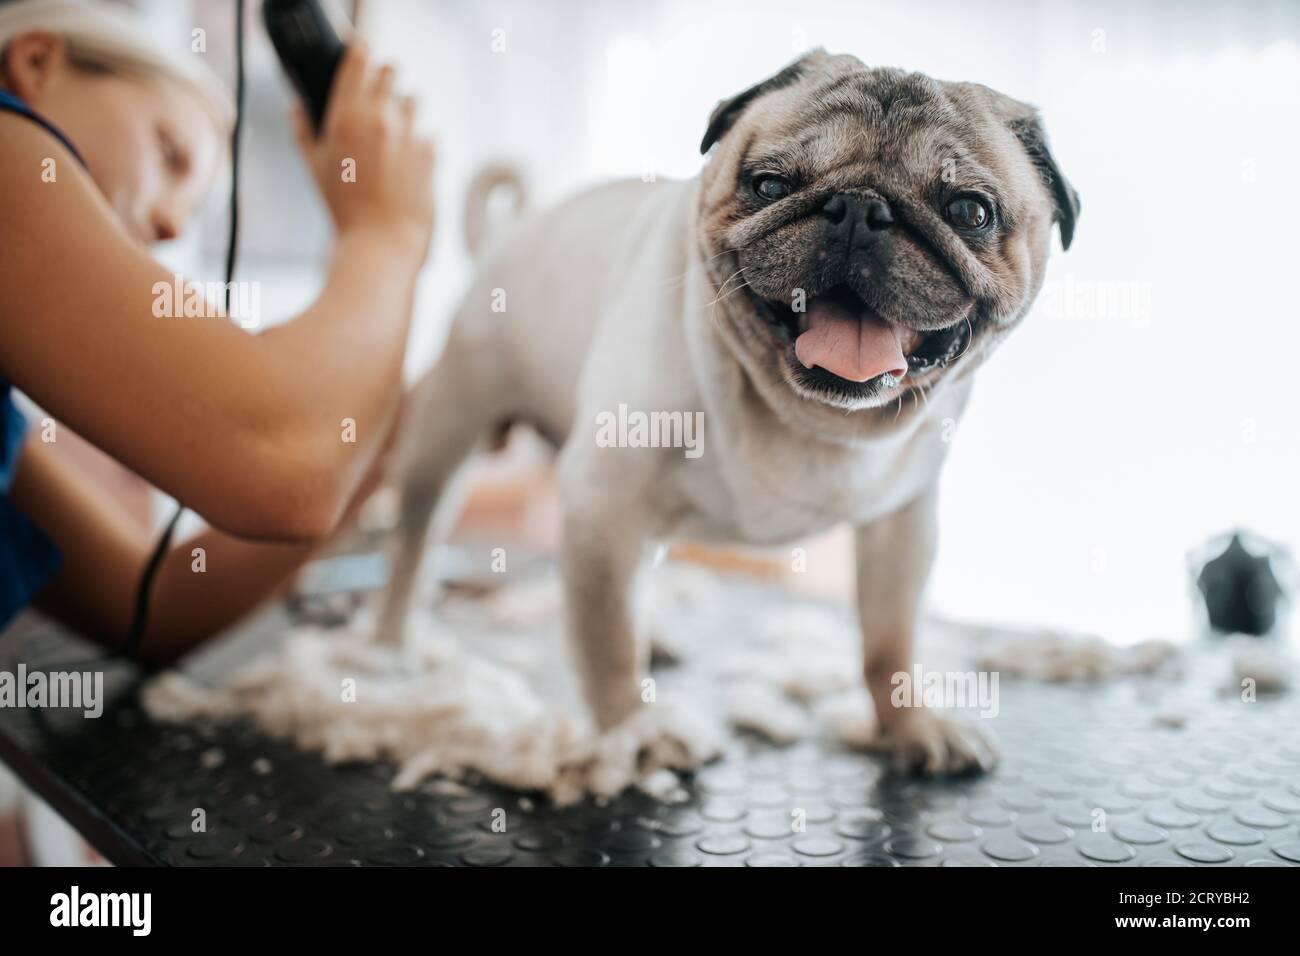 Hundepflegekonzept. Pflege und Waschen Mops Brot Hund im Salon  Stockfotografie - Alamy